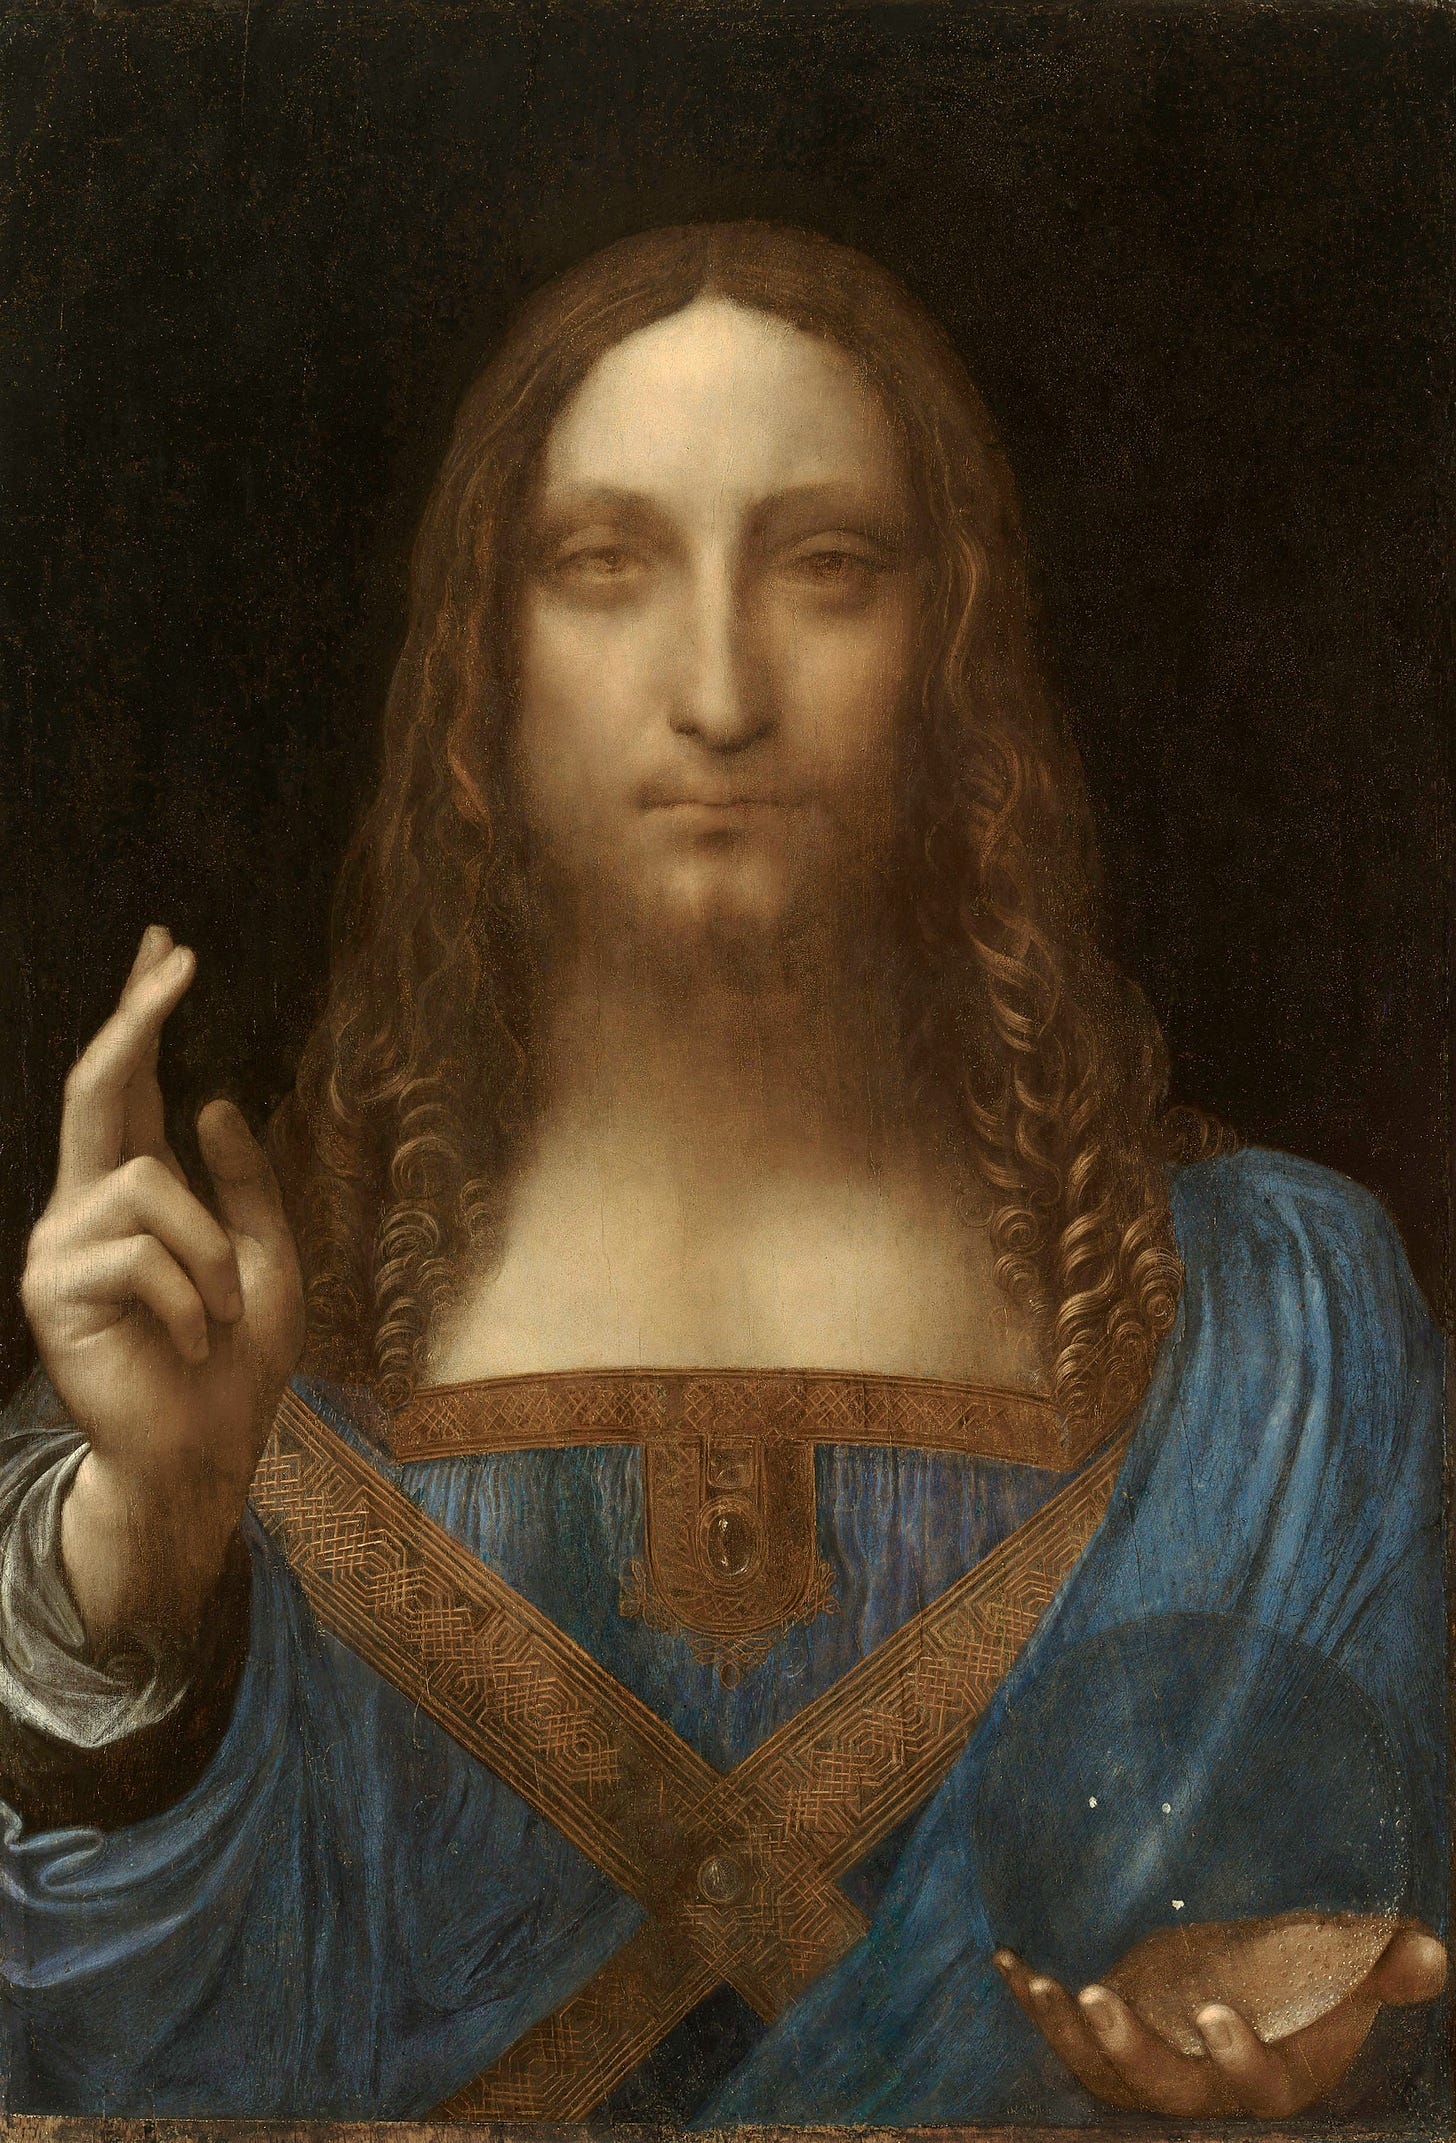 Leonardo_da_Vinci%2C_Salvator_Mundi%2C_c.1500%2C_oil_on_walnut%2C_45.4_%C3%97_65.6_cm.jpg